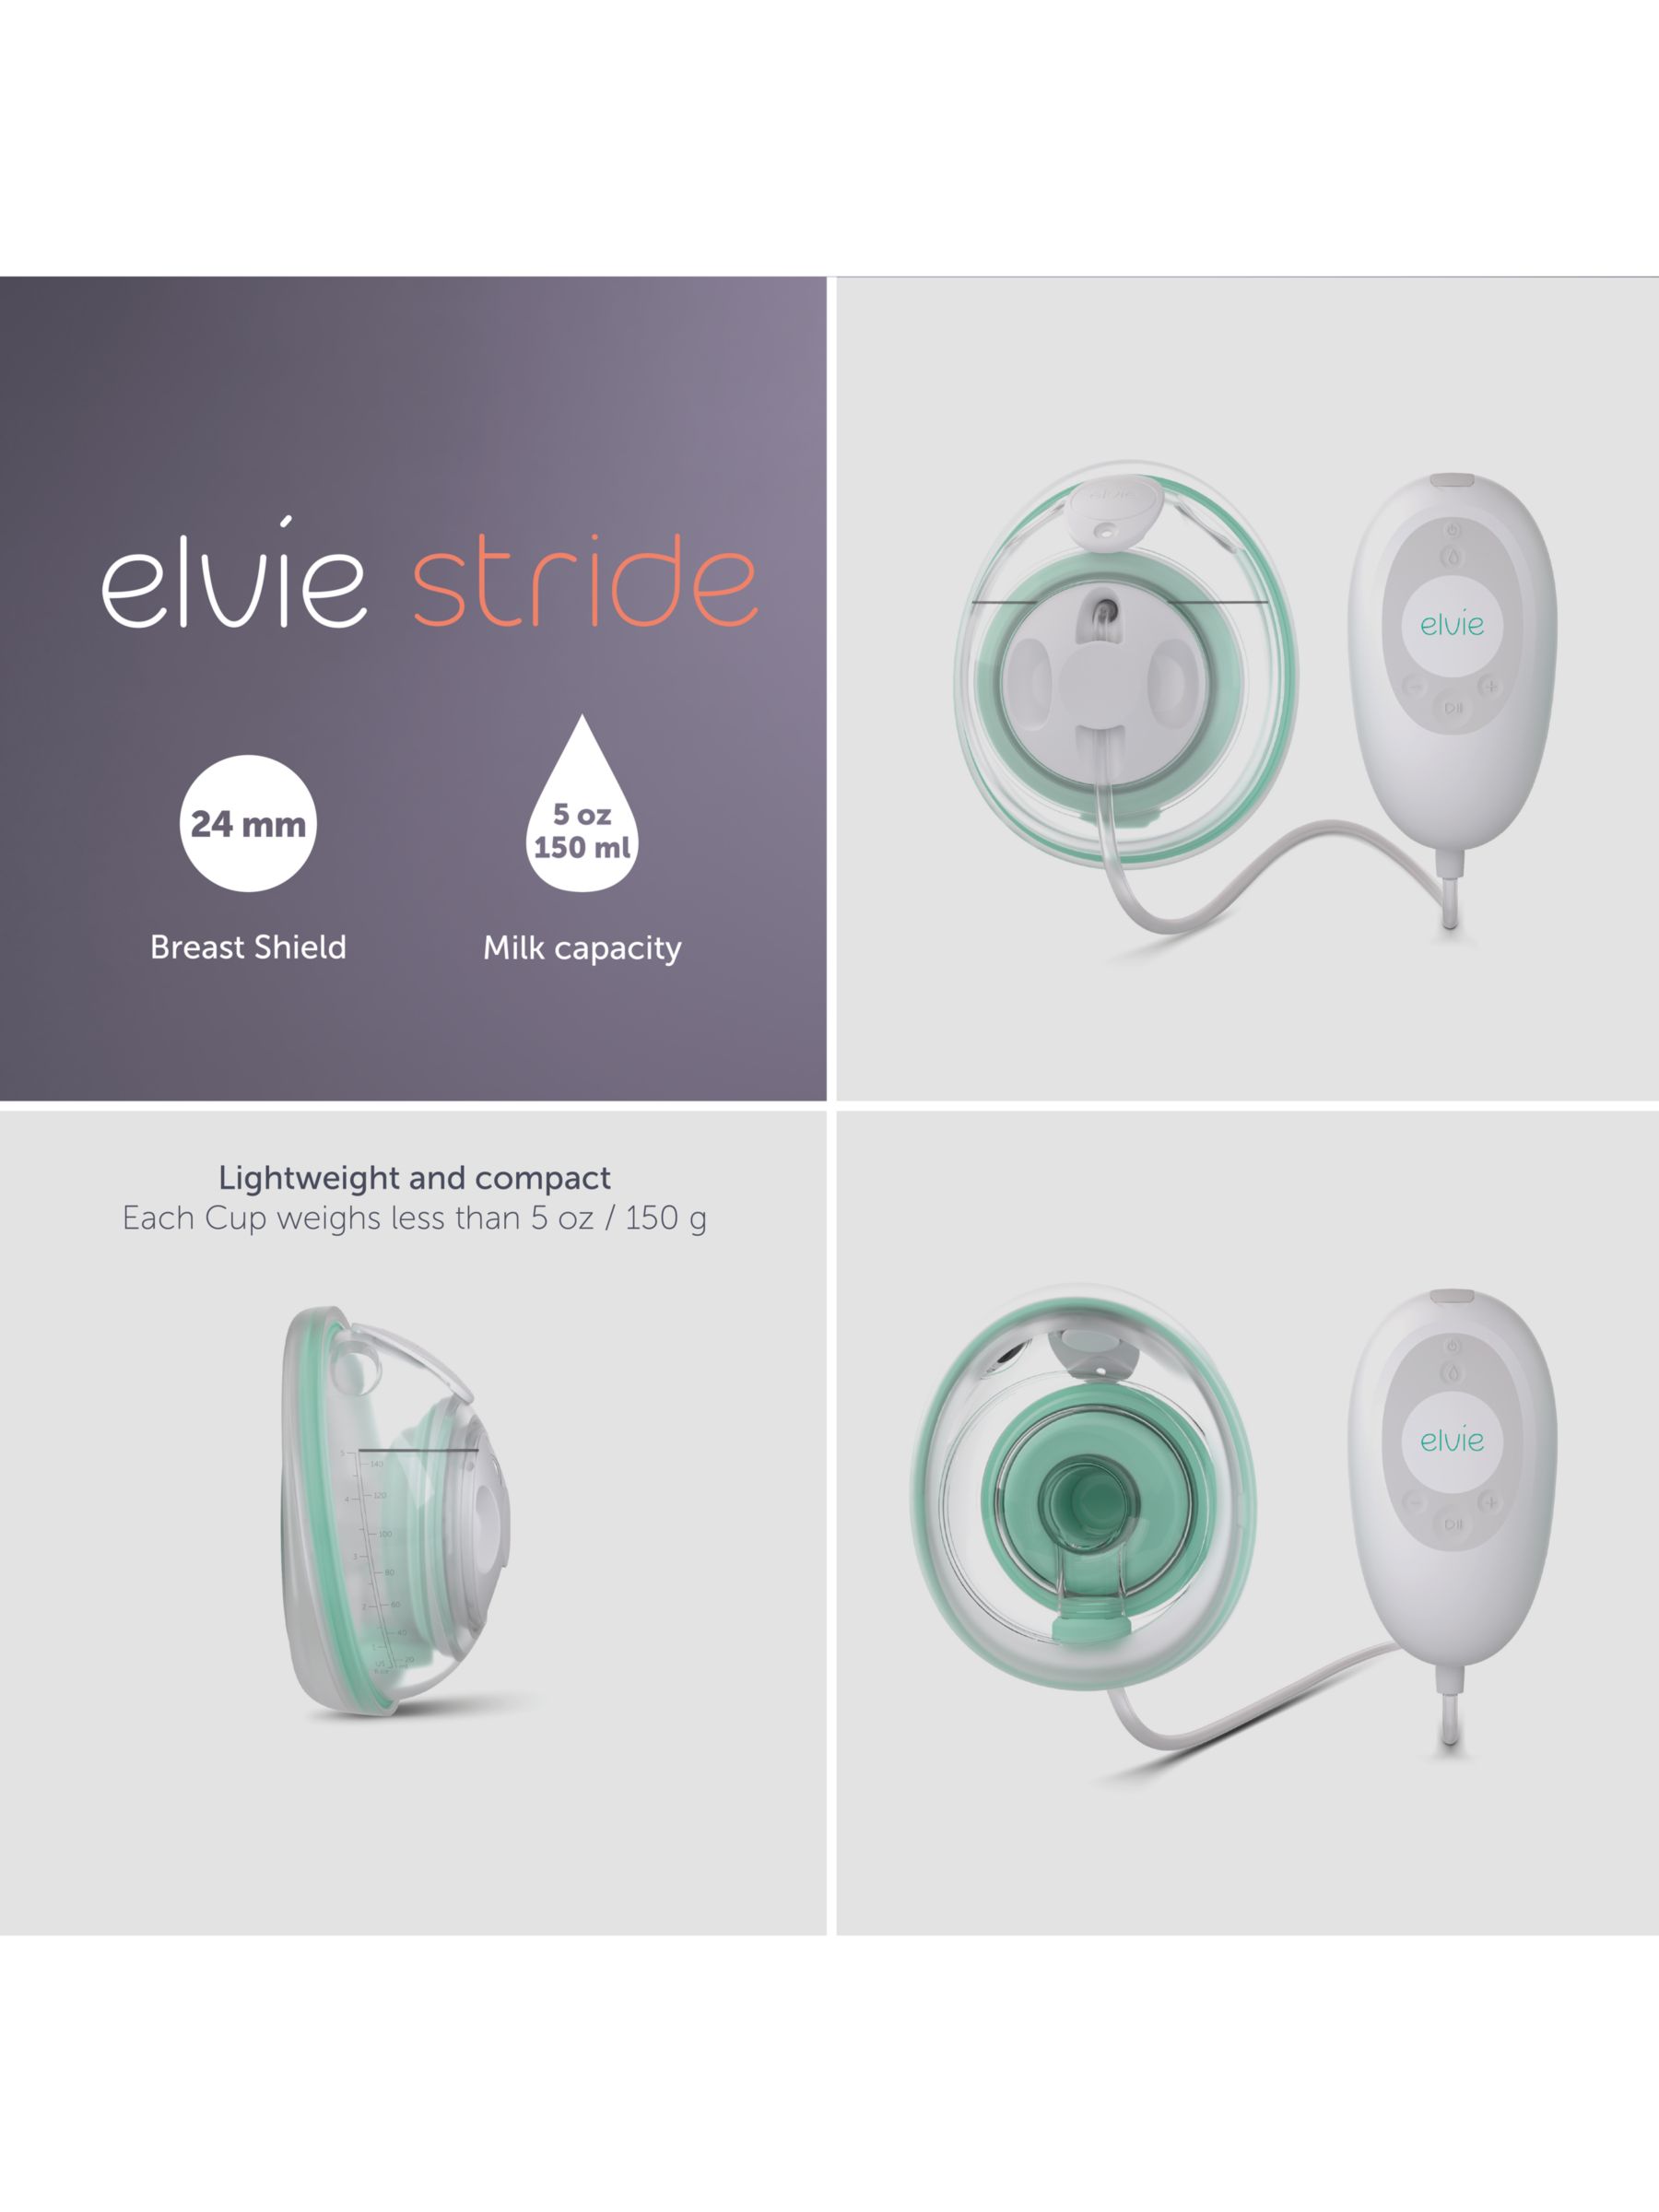 Elvie Stride Connect Kit